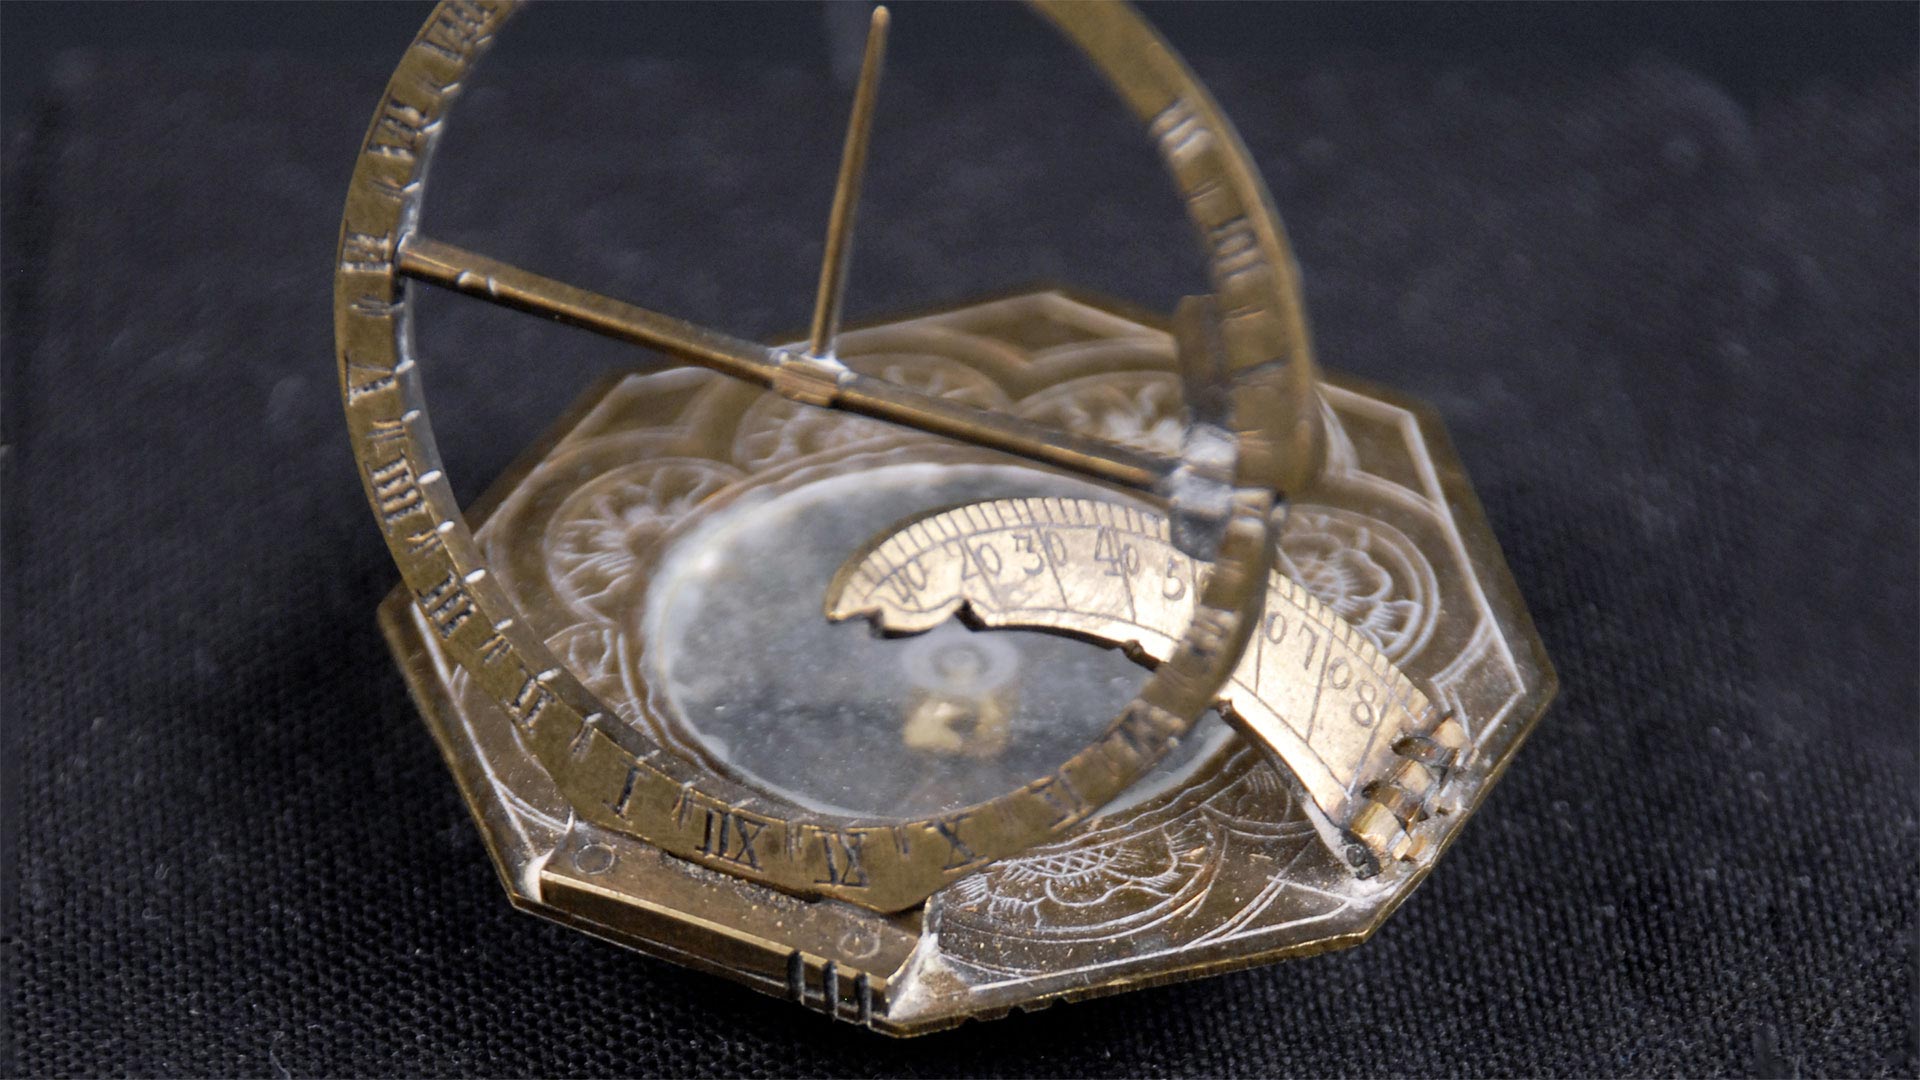 https://www.spurlock.illinois.edu/img/blog/2018/151-sundial-compass/hero_1920.jpg